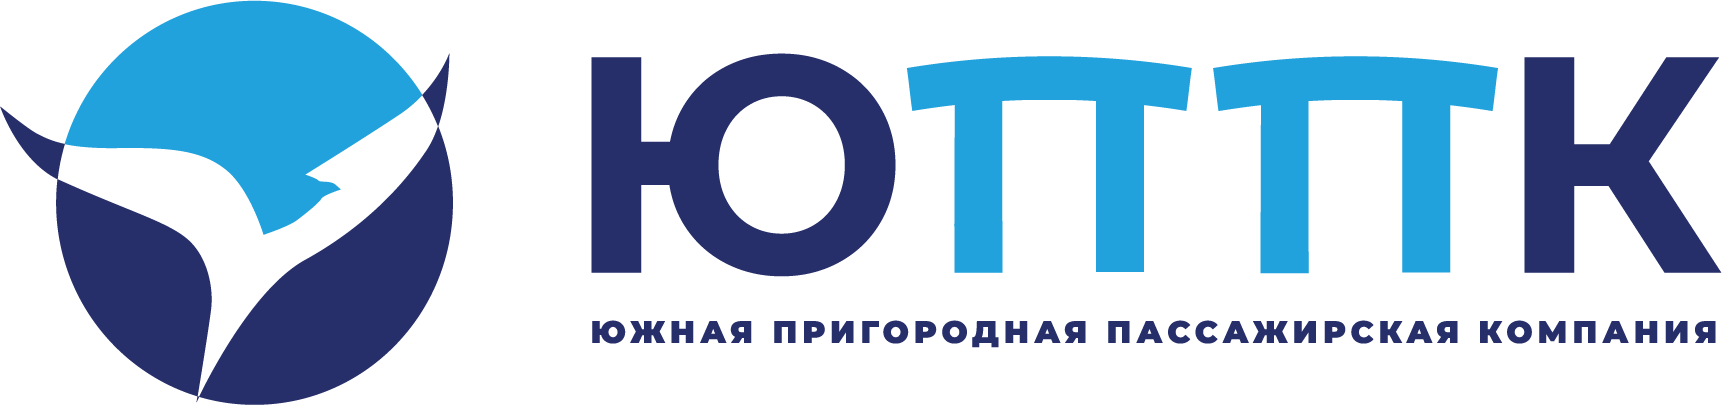 Логотип ООО ЮППК.png